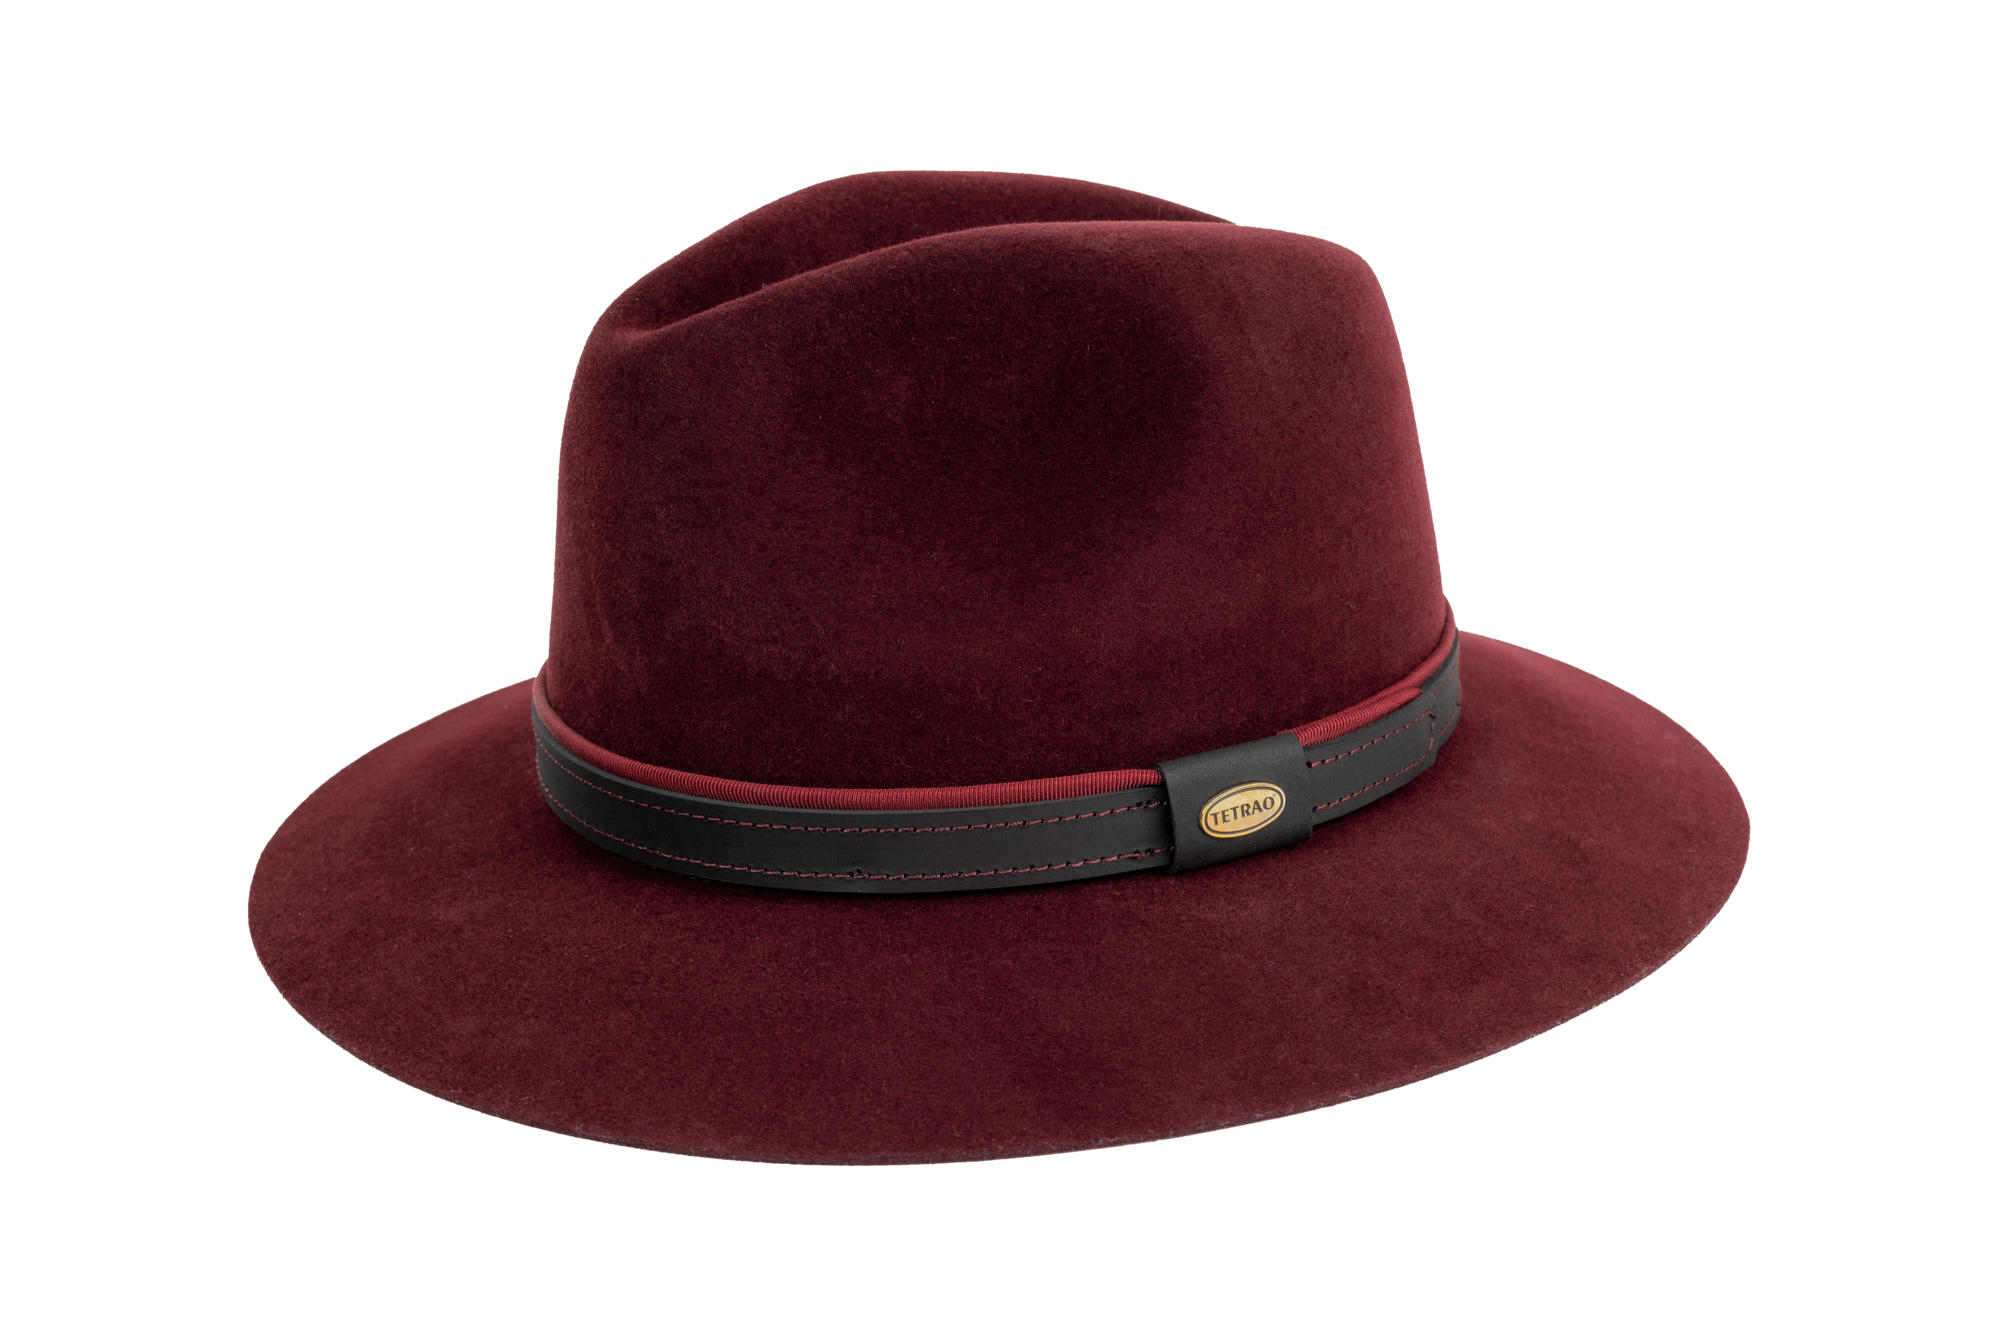 Poľovnícky klobúk TETRAO Exclusive zajac - bordó  61